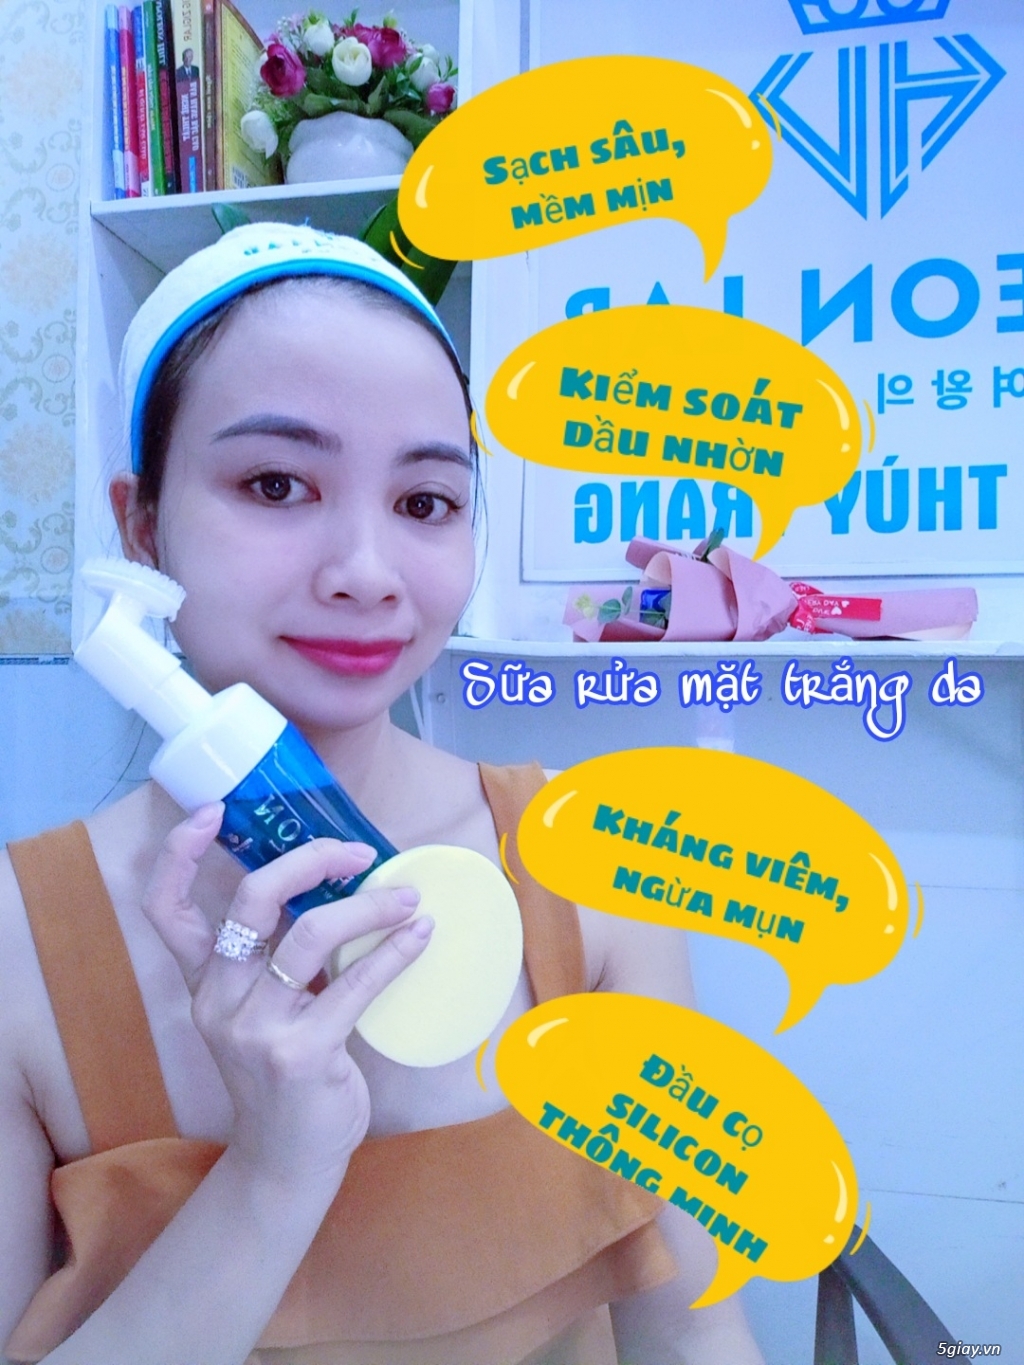 Sữa rửa mặt đầu cọ Hyeon lab, mỹ phẩm cao cấp Hyeon lab. - 3